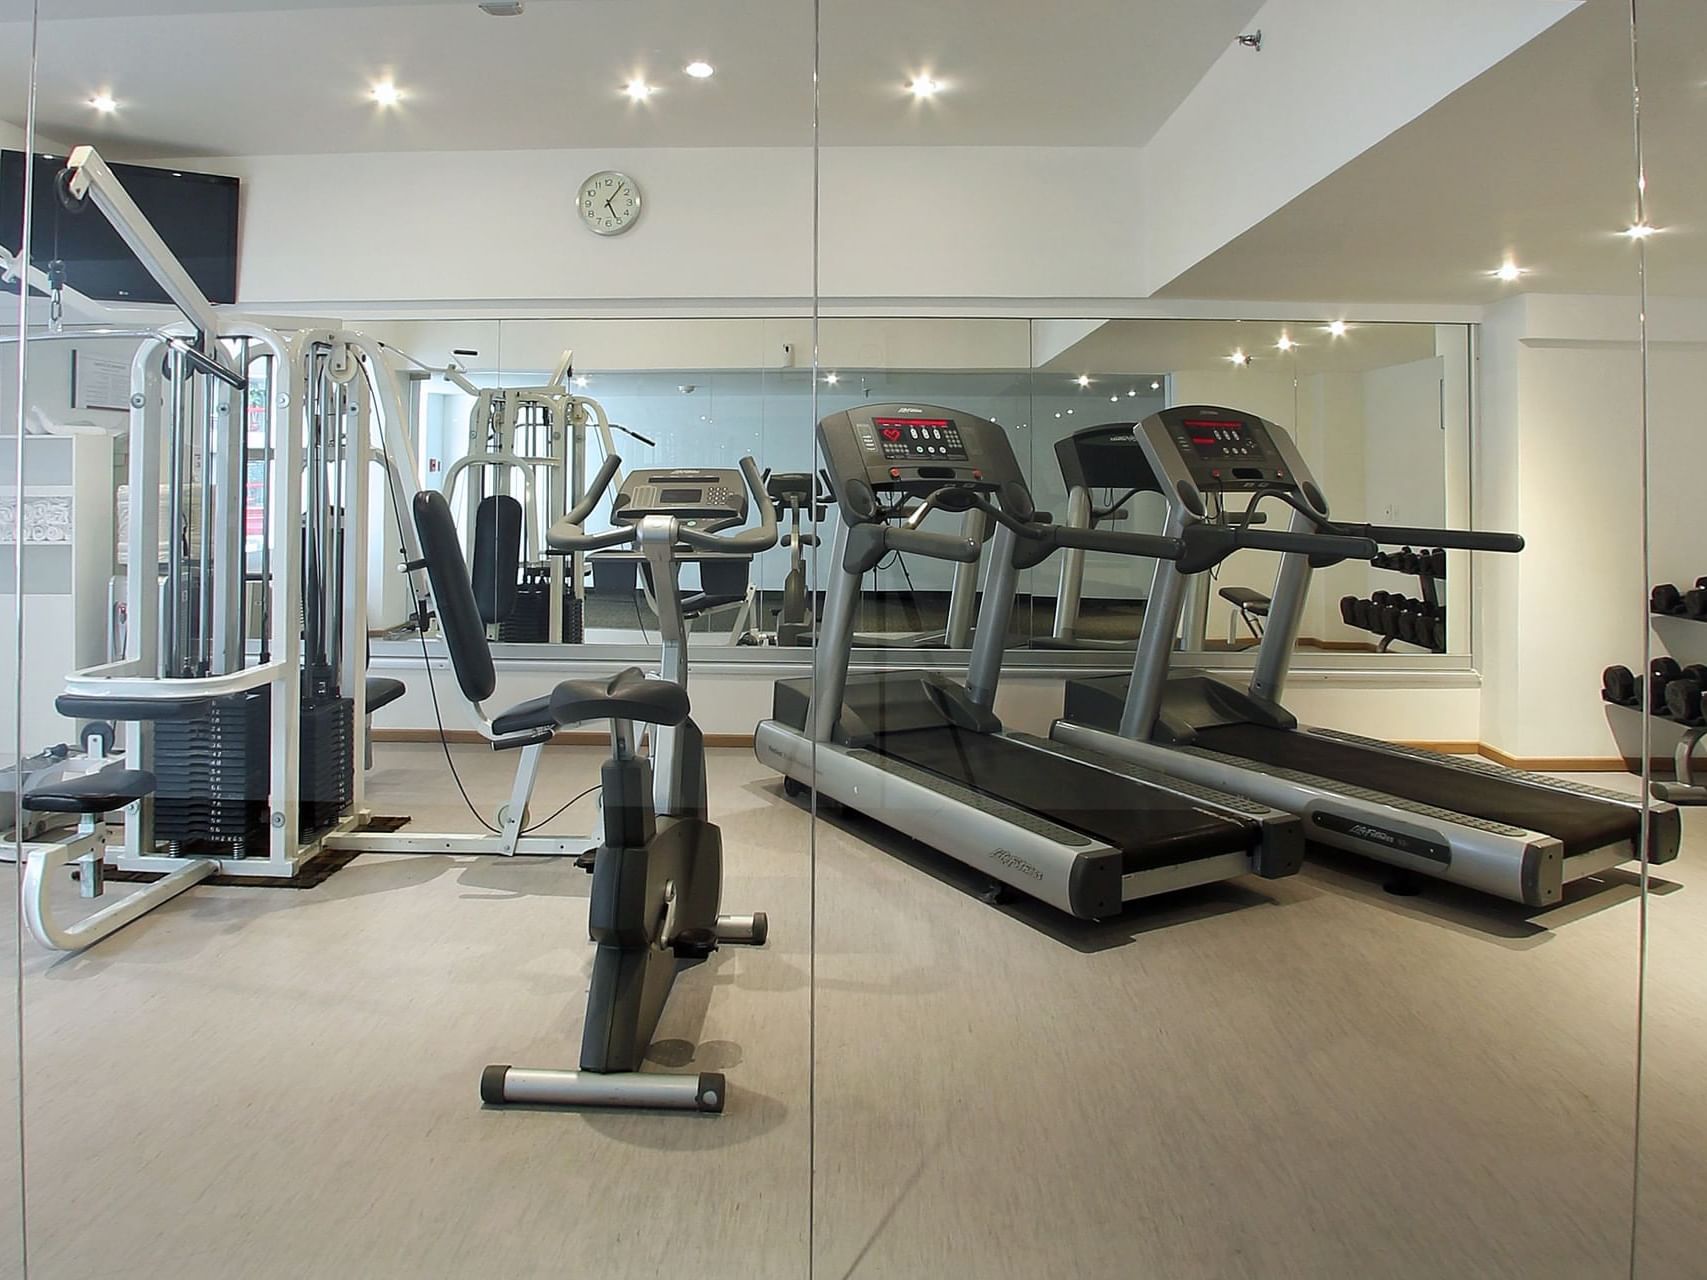 Exercise machines & Tv in Gym Wellness Center at Fiesta Inn